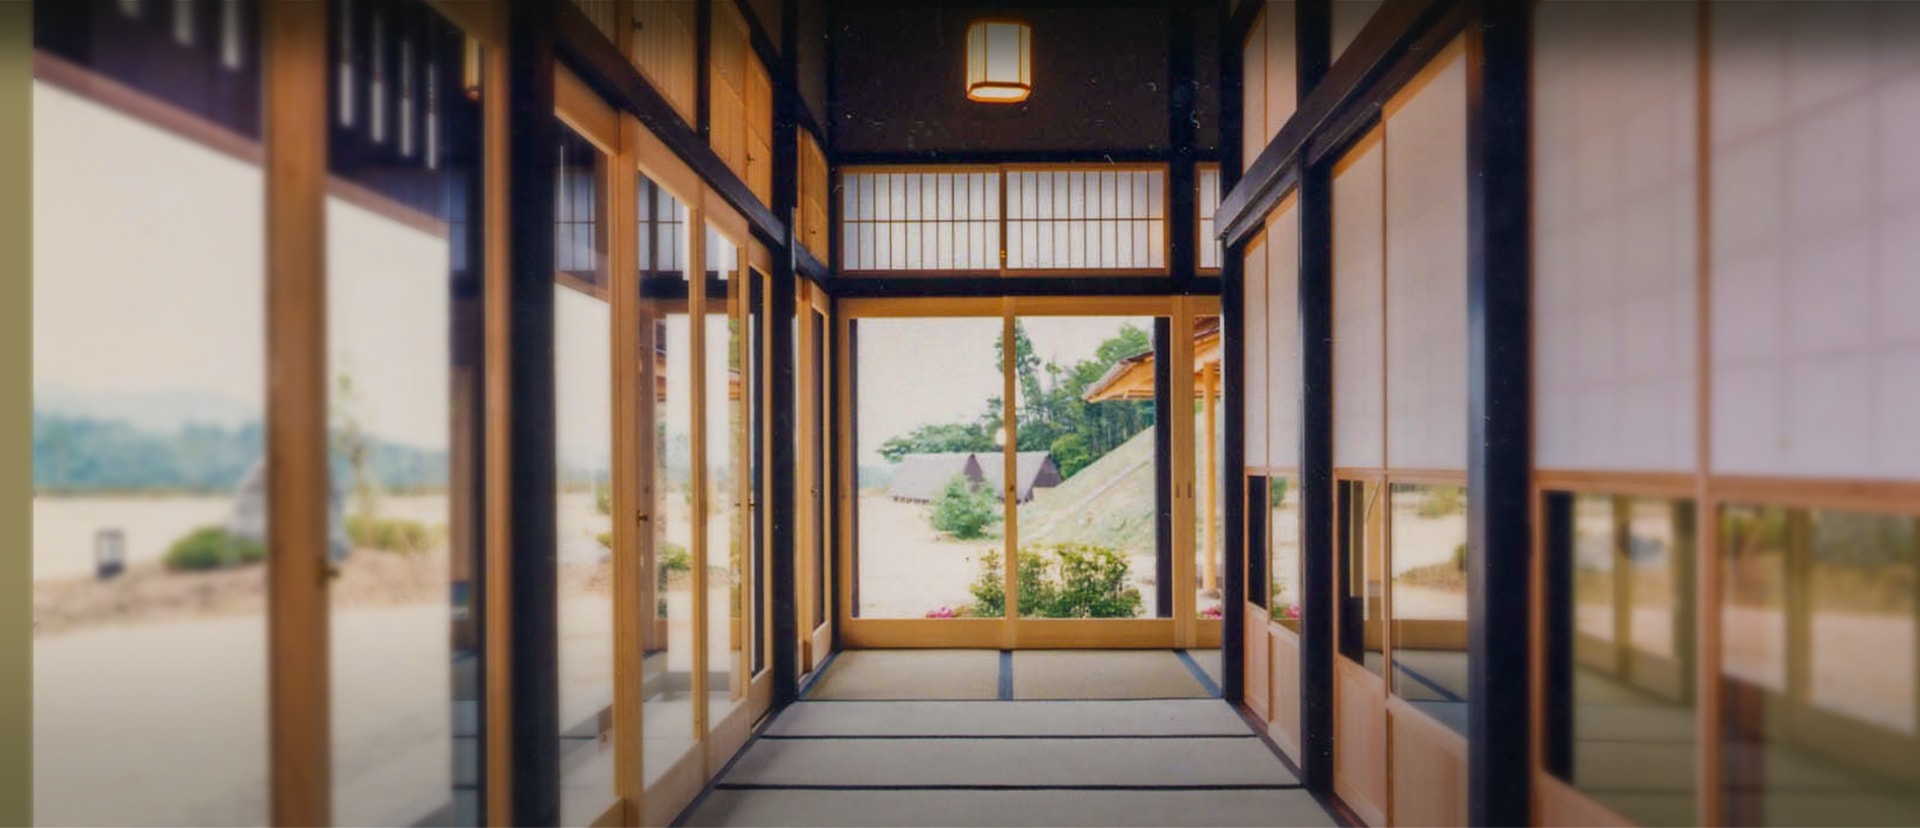 古民家再生・和風住宅日本の「家」を、再構築。